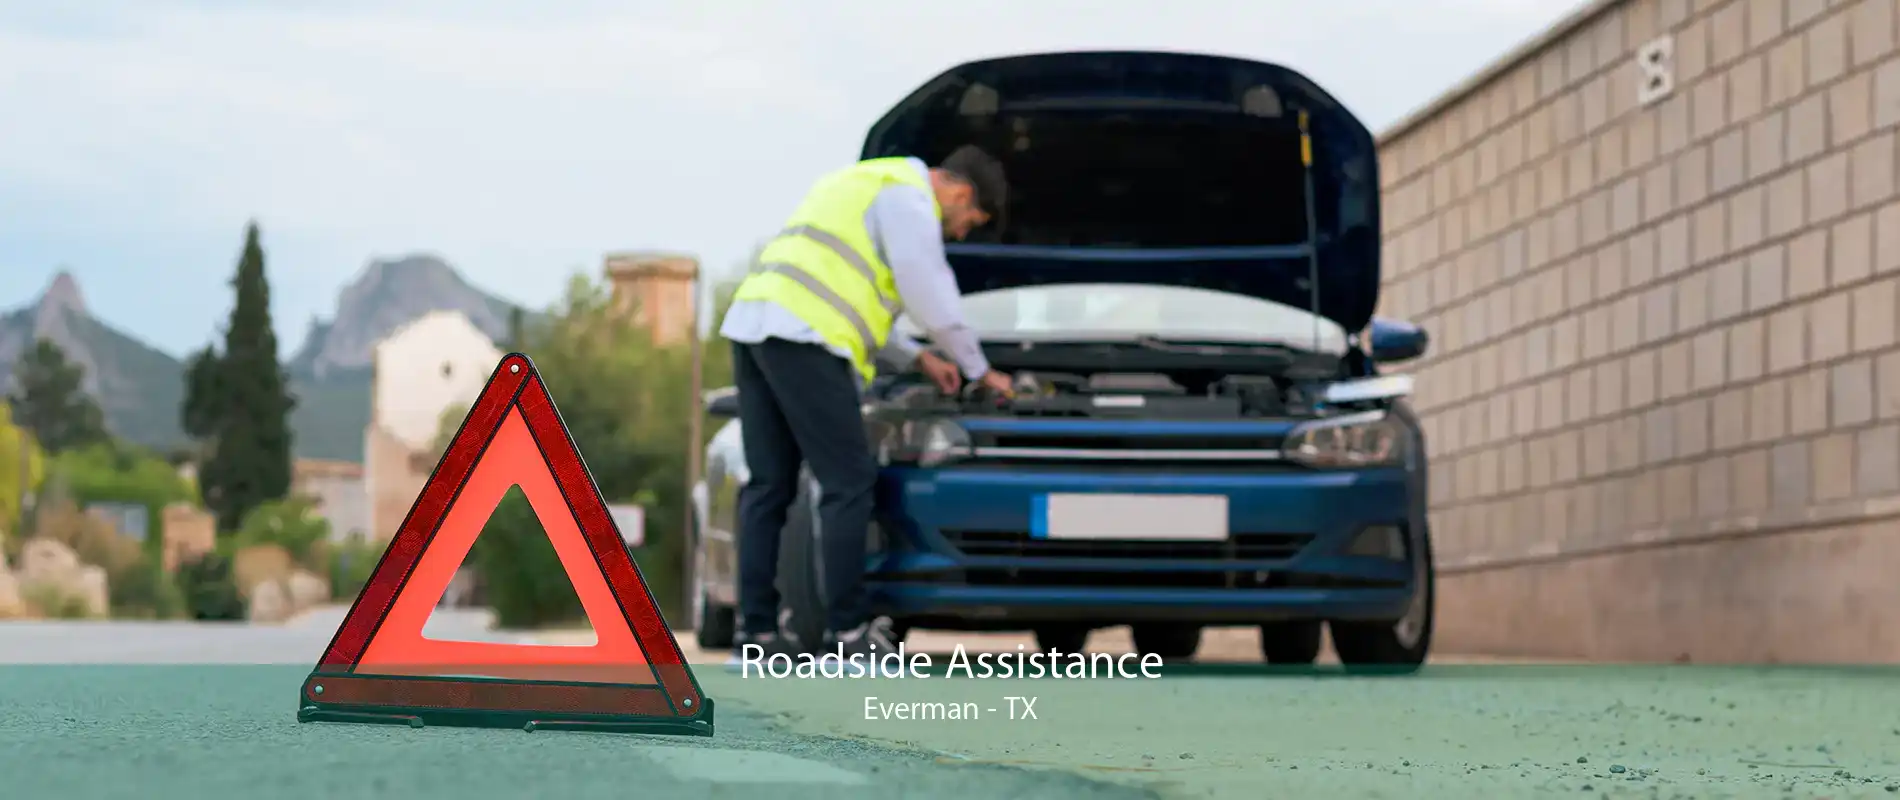 Roadside Assistance Everman - TX